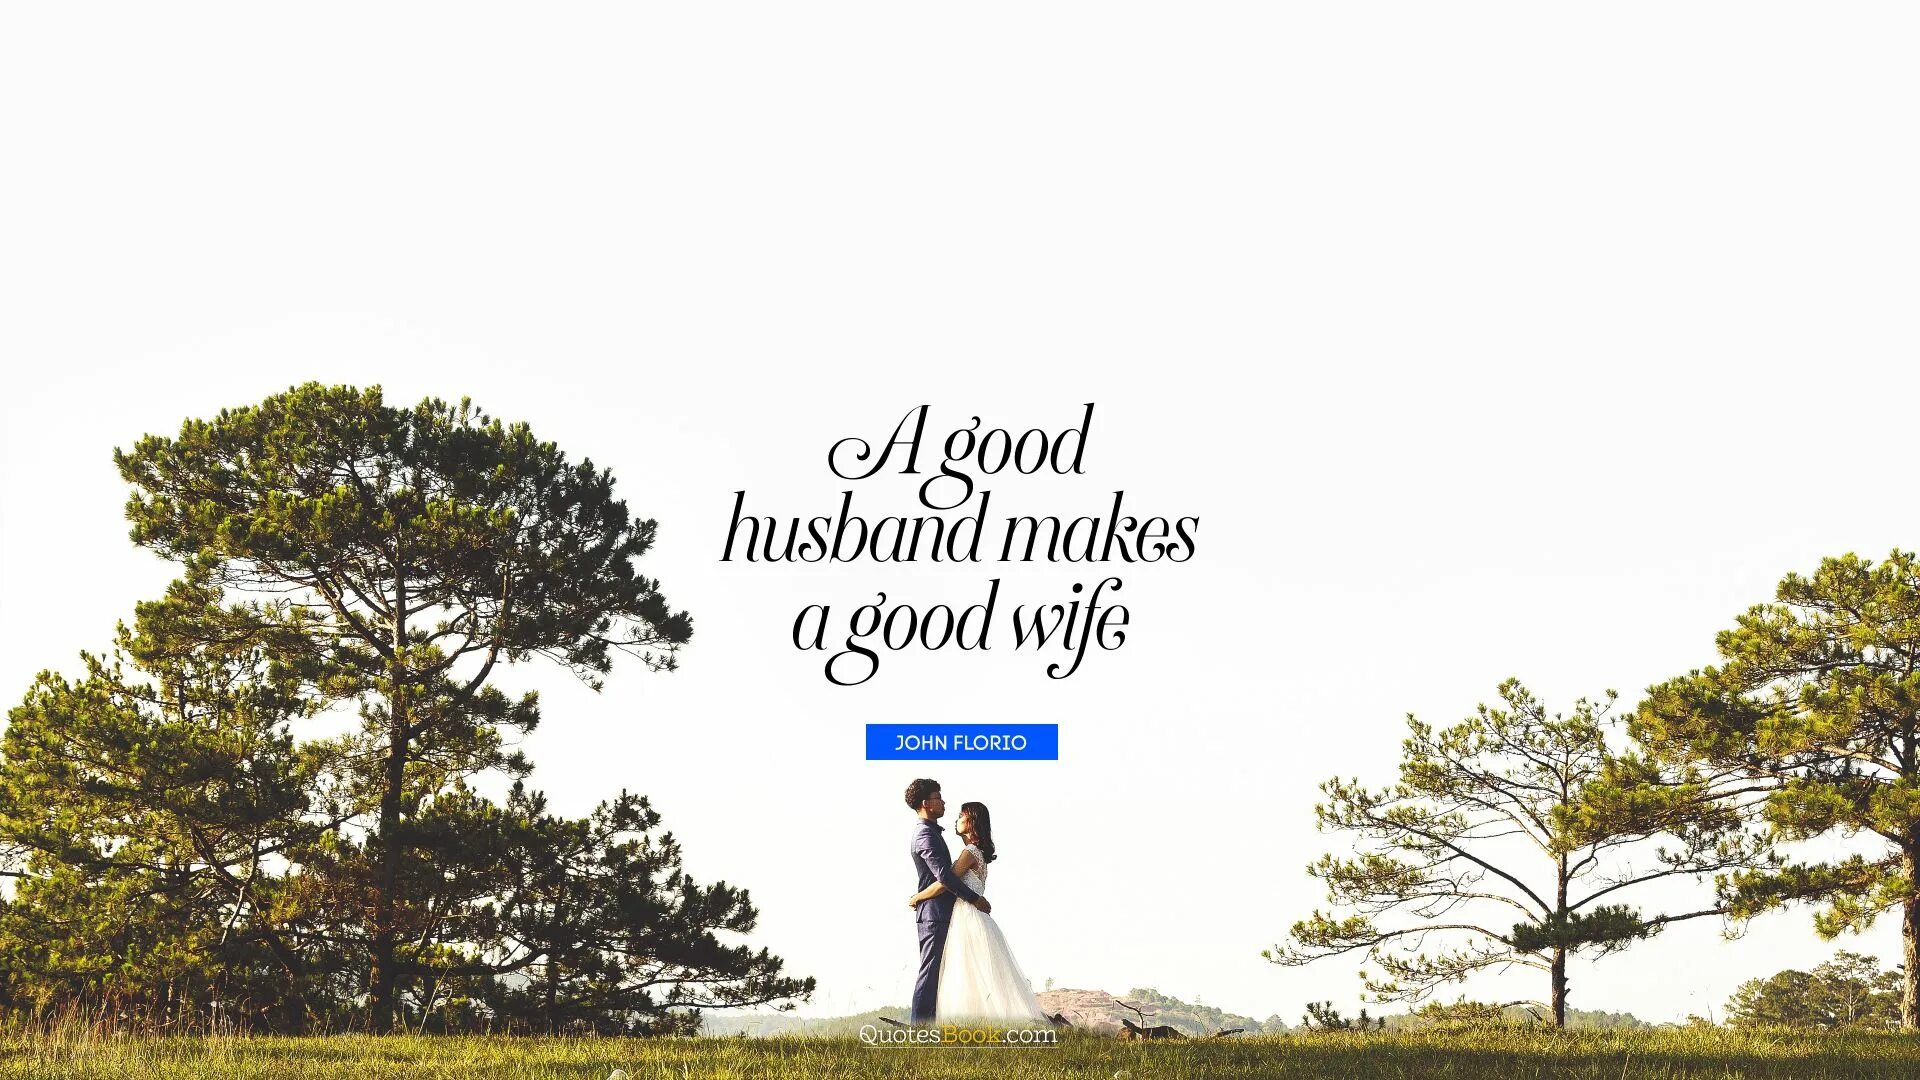 Good husband. A good husbands Guide. Husband is good. A good husband vs a good wife.